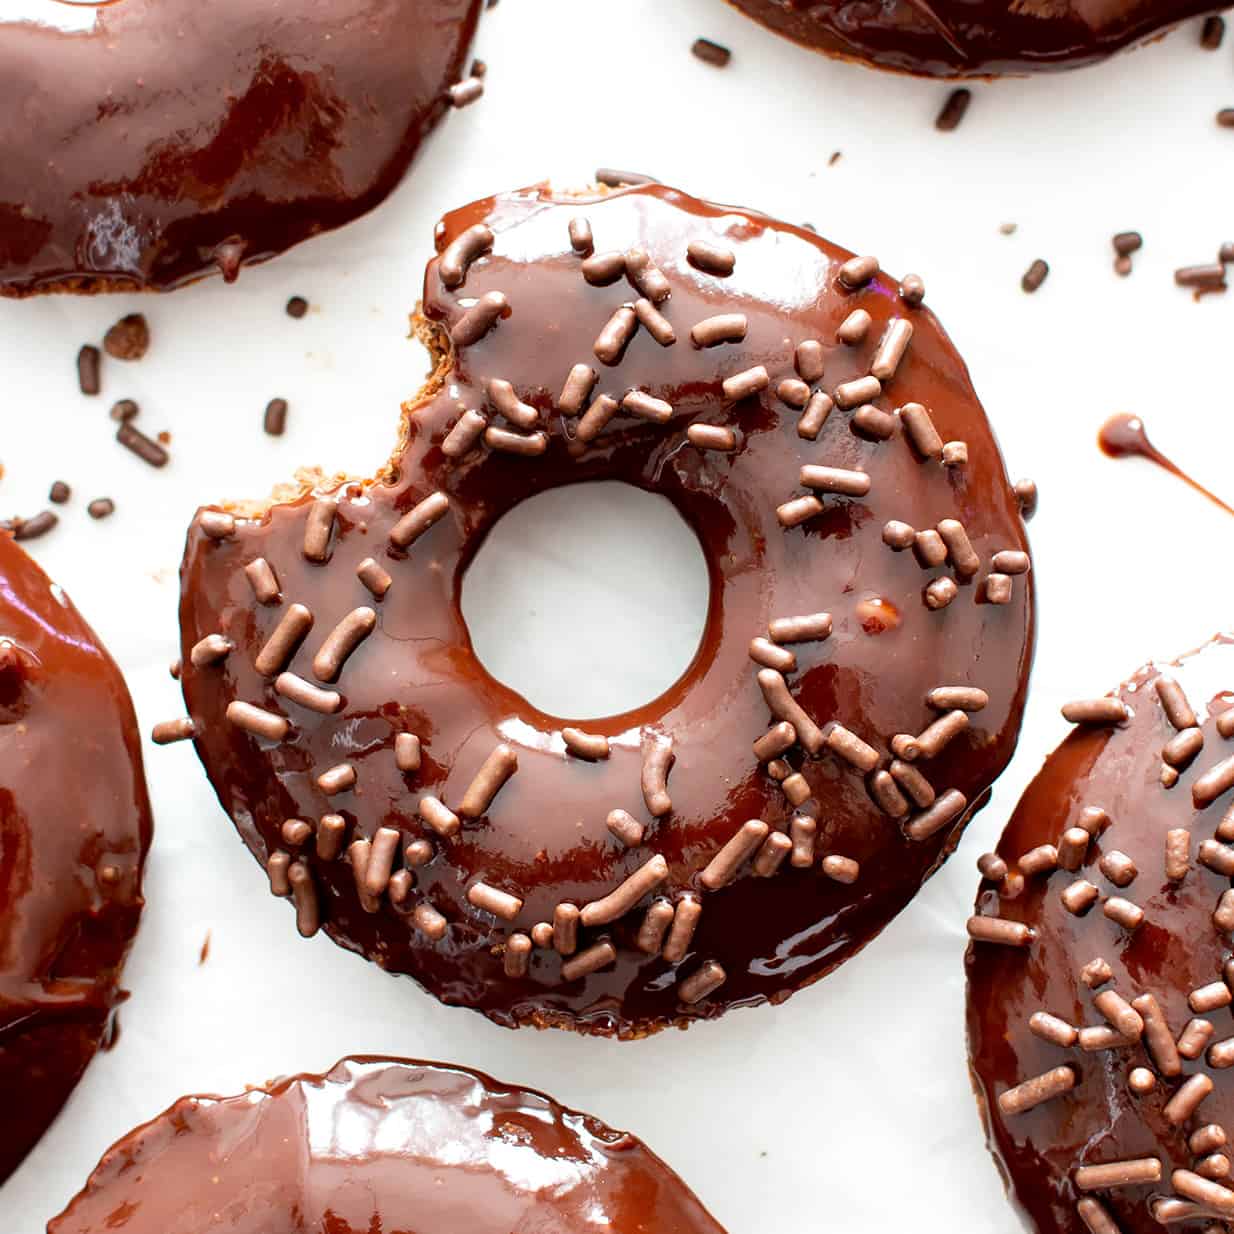 Soft Baked Chocolate Vegan Donuts Recipe (Gluten Free) – w/ Vegan Chocolate Ganache Glaze!